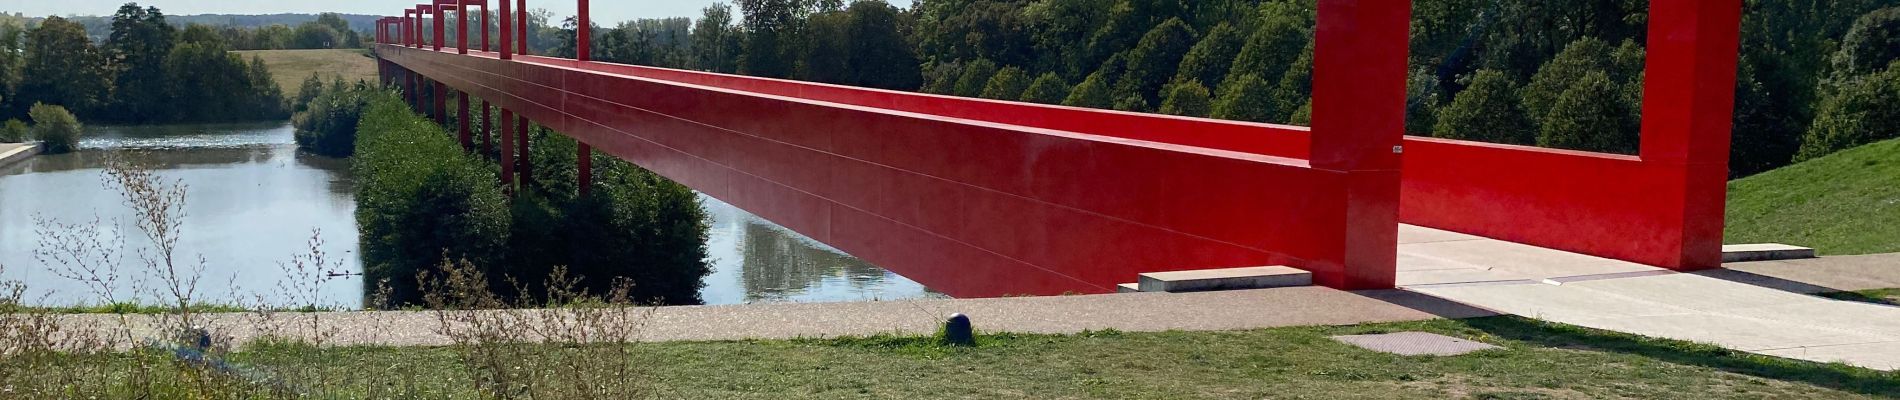 POI Cergy - pont rouge - Photo